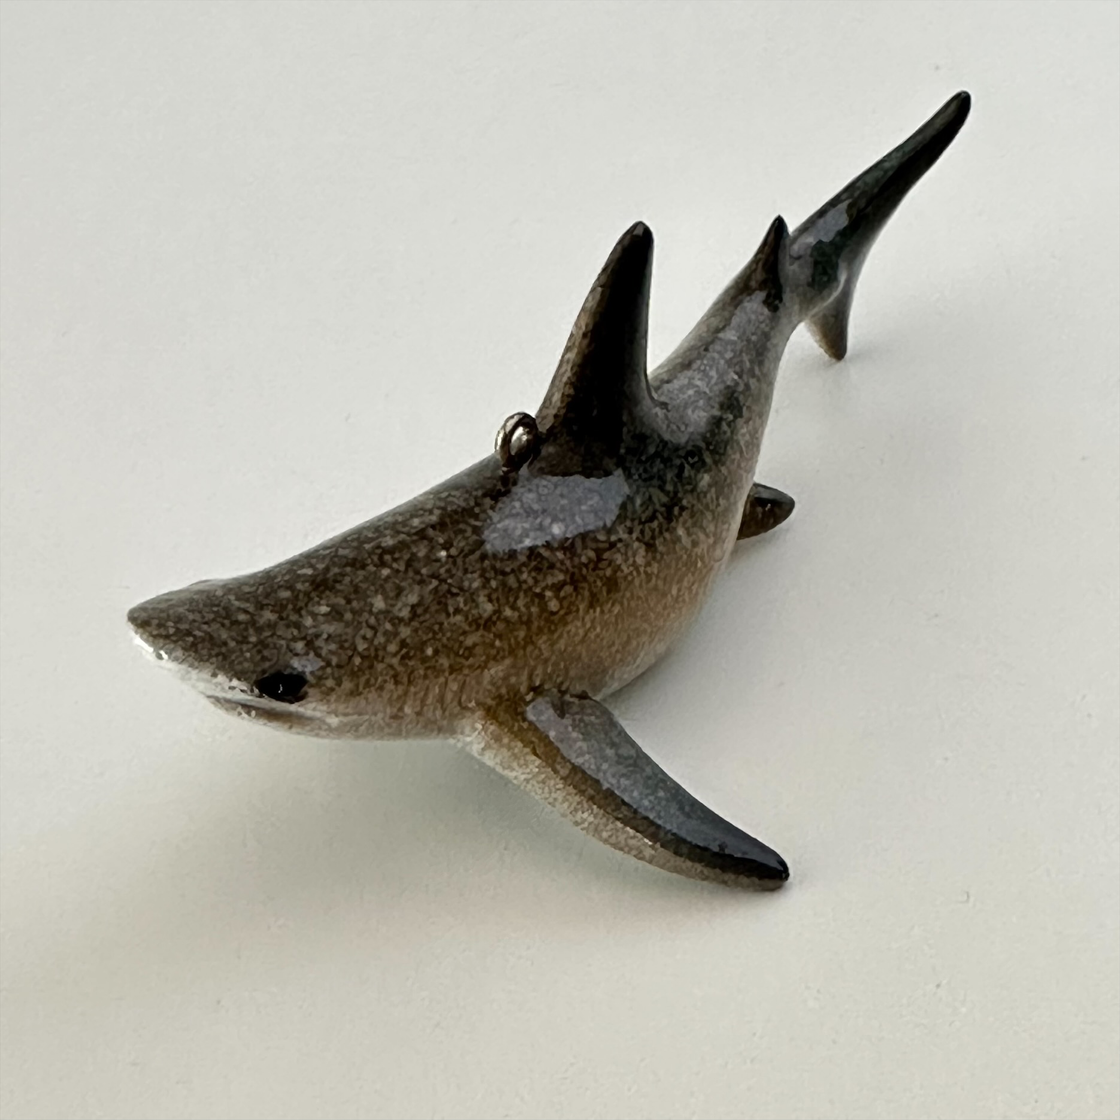 Shark Christmas Ornament – "Jawsome" Holiday Gift for Shark Lovers!